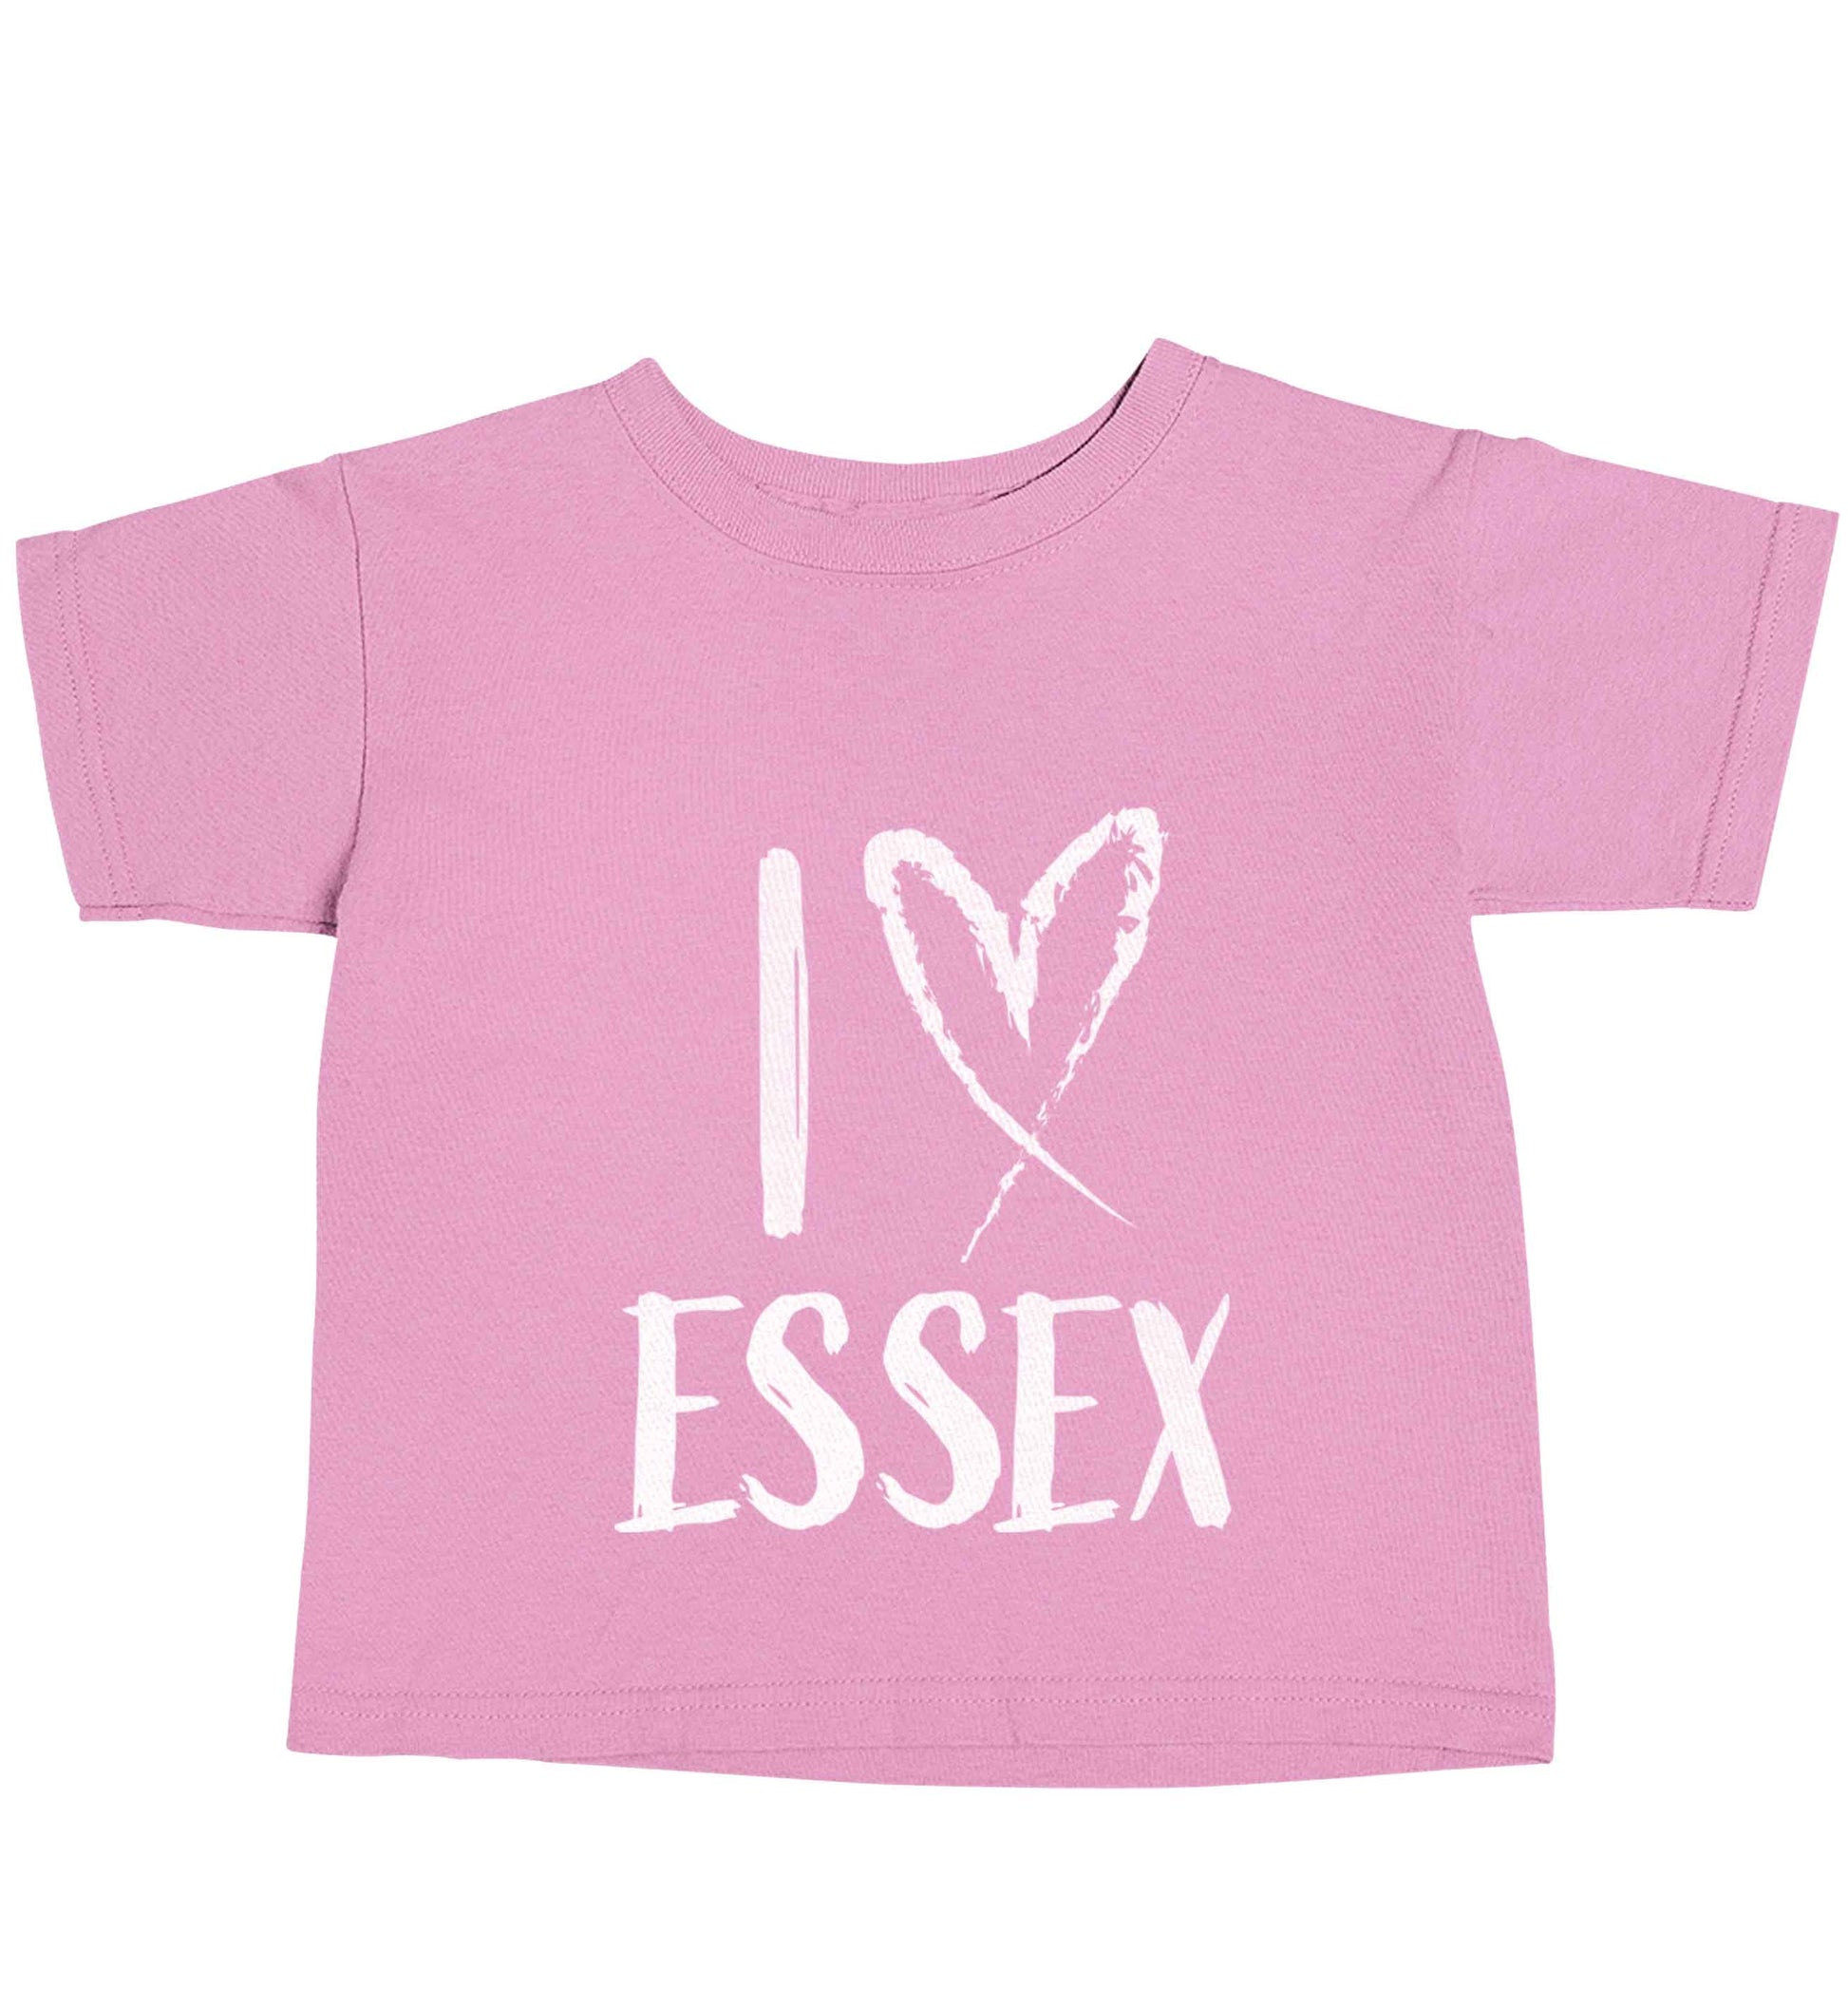 I love Essex light pink baby toddler Tshirt 2 Years